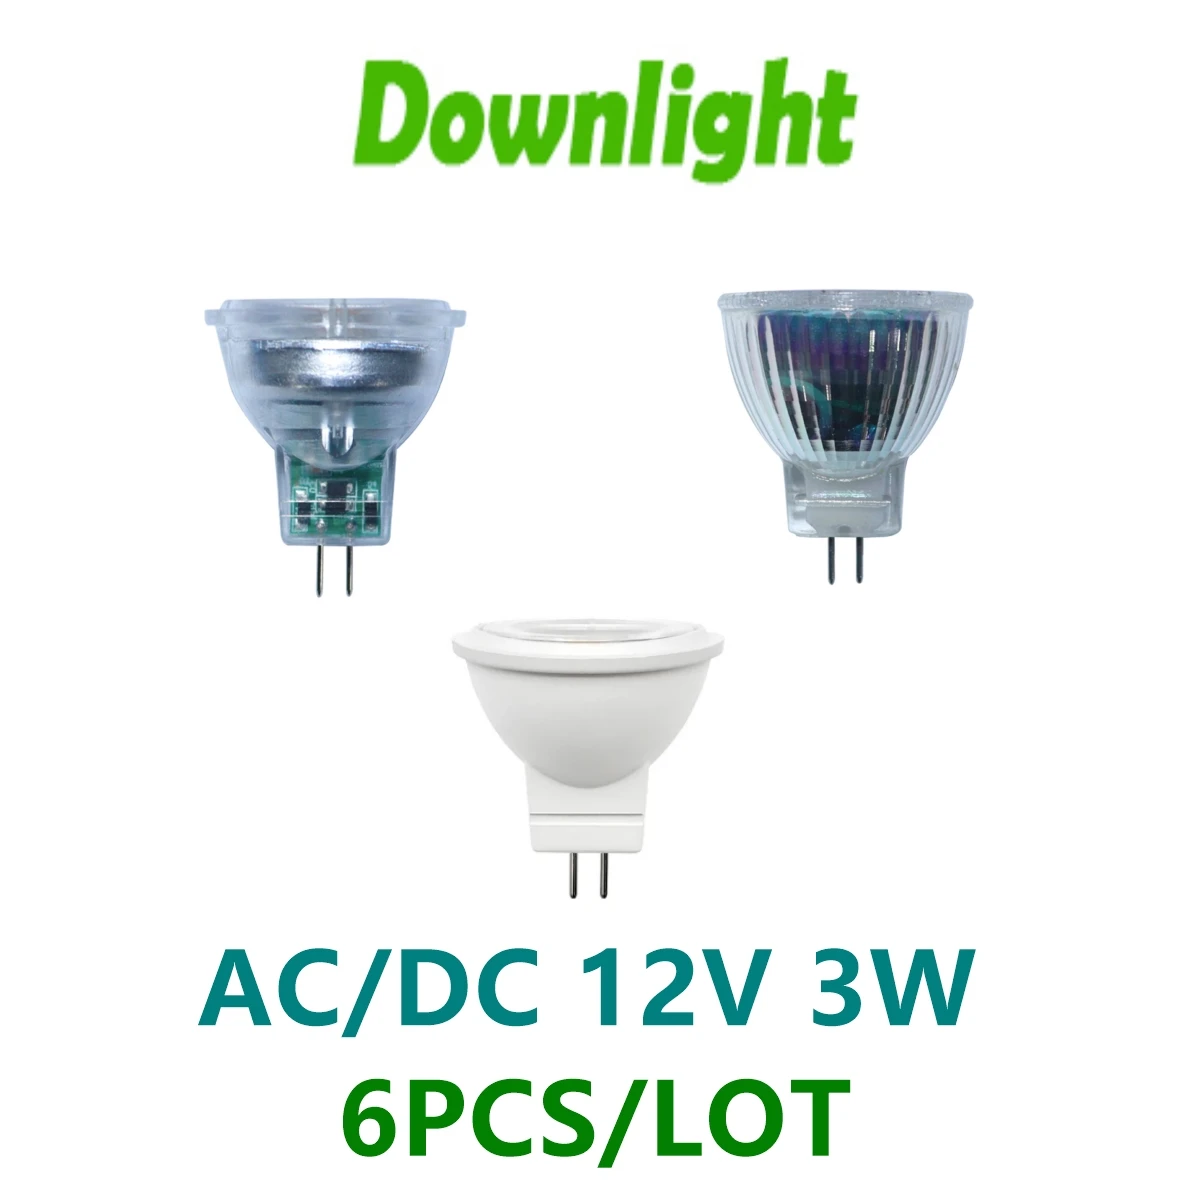 6pcs  Led mini Spotlight Mr11 GU4 AC/DC 12V 3W 3000K-6000K Warm White For Ceiling Lights Replace Halogen Lamp 20w Energy Saving